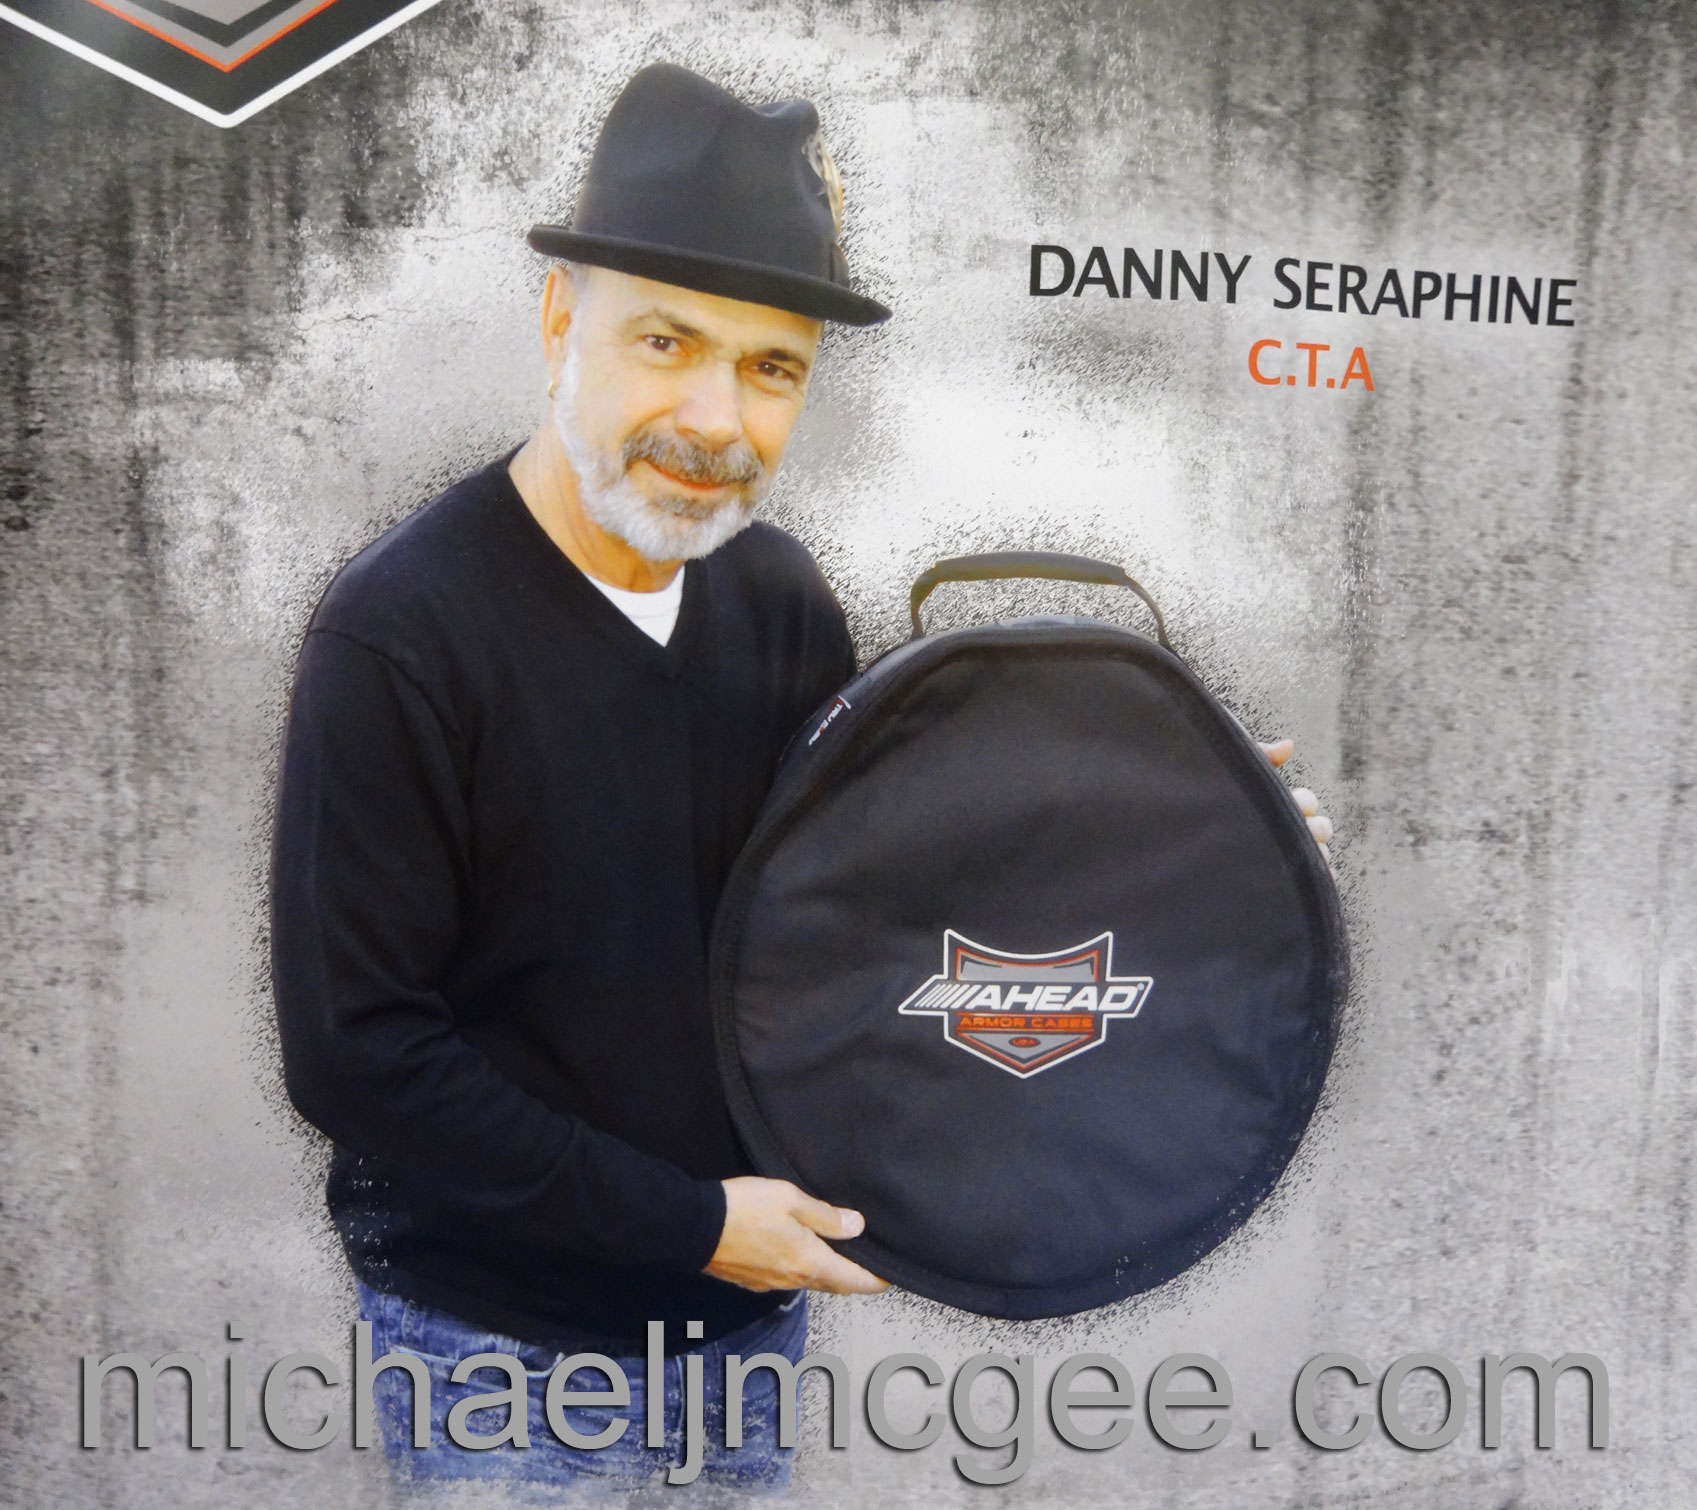 Danny Seraphine / michaeljmcgee.com